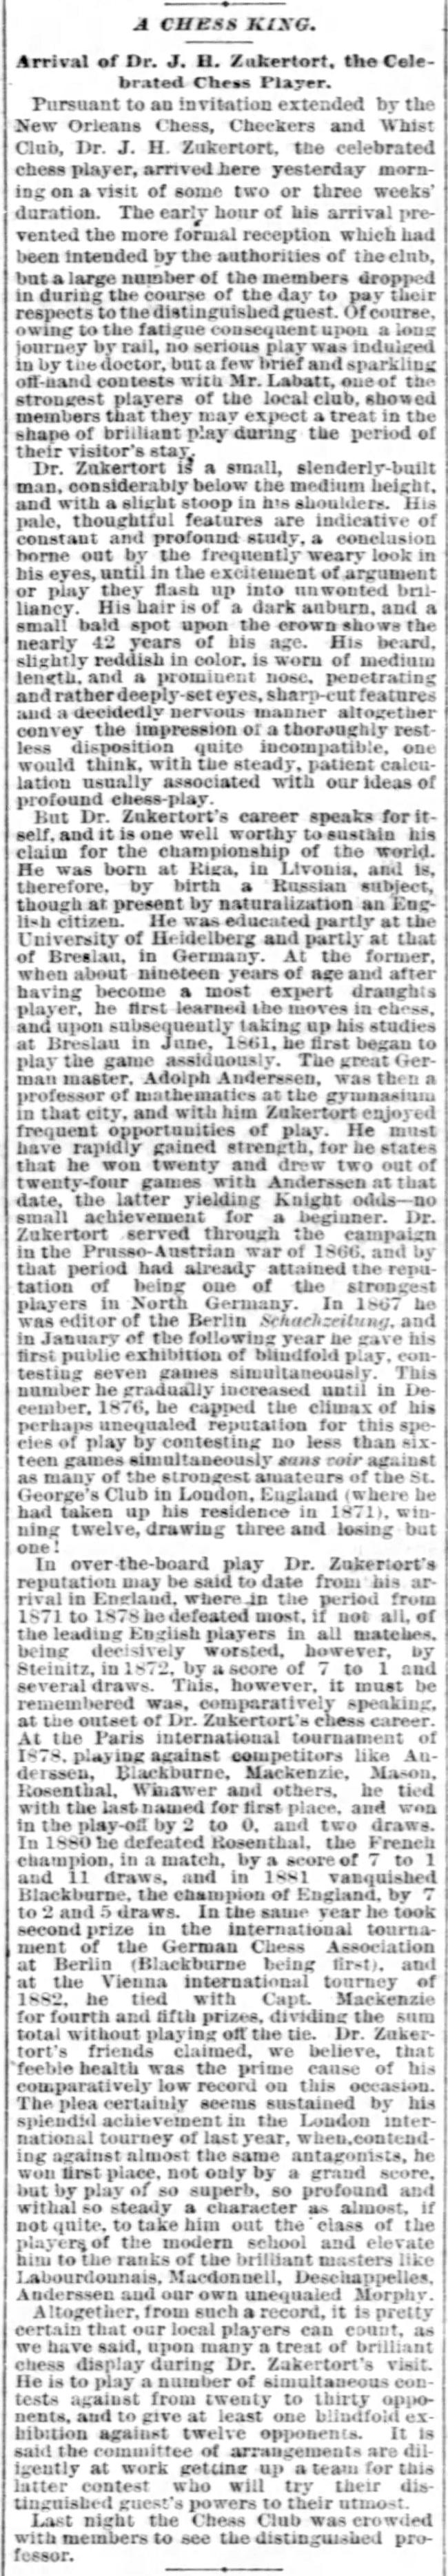 1884.04.16-01 New Orleans Times-Democrat.jpg